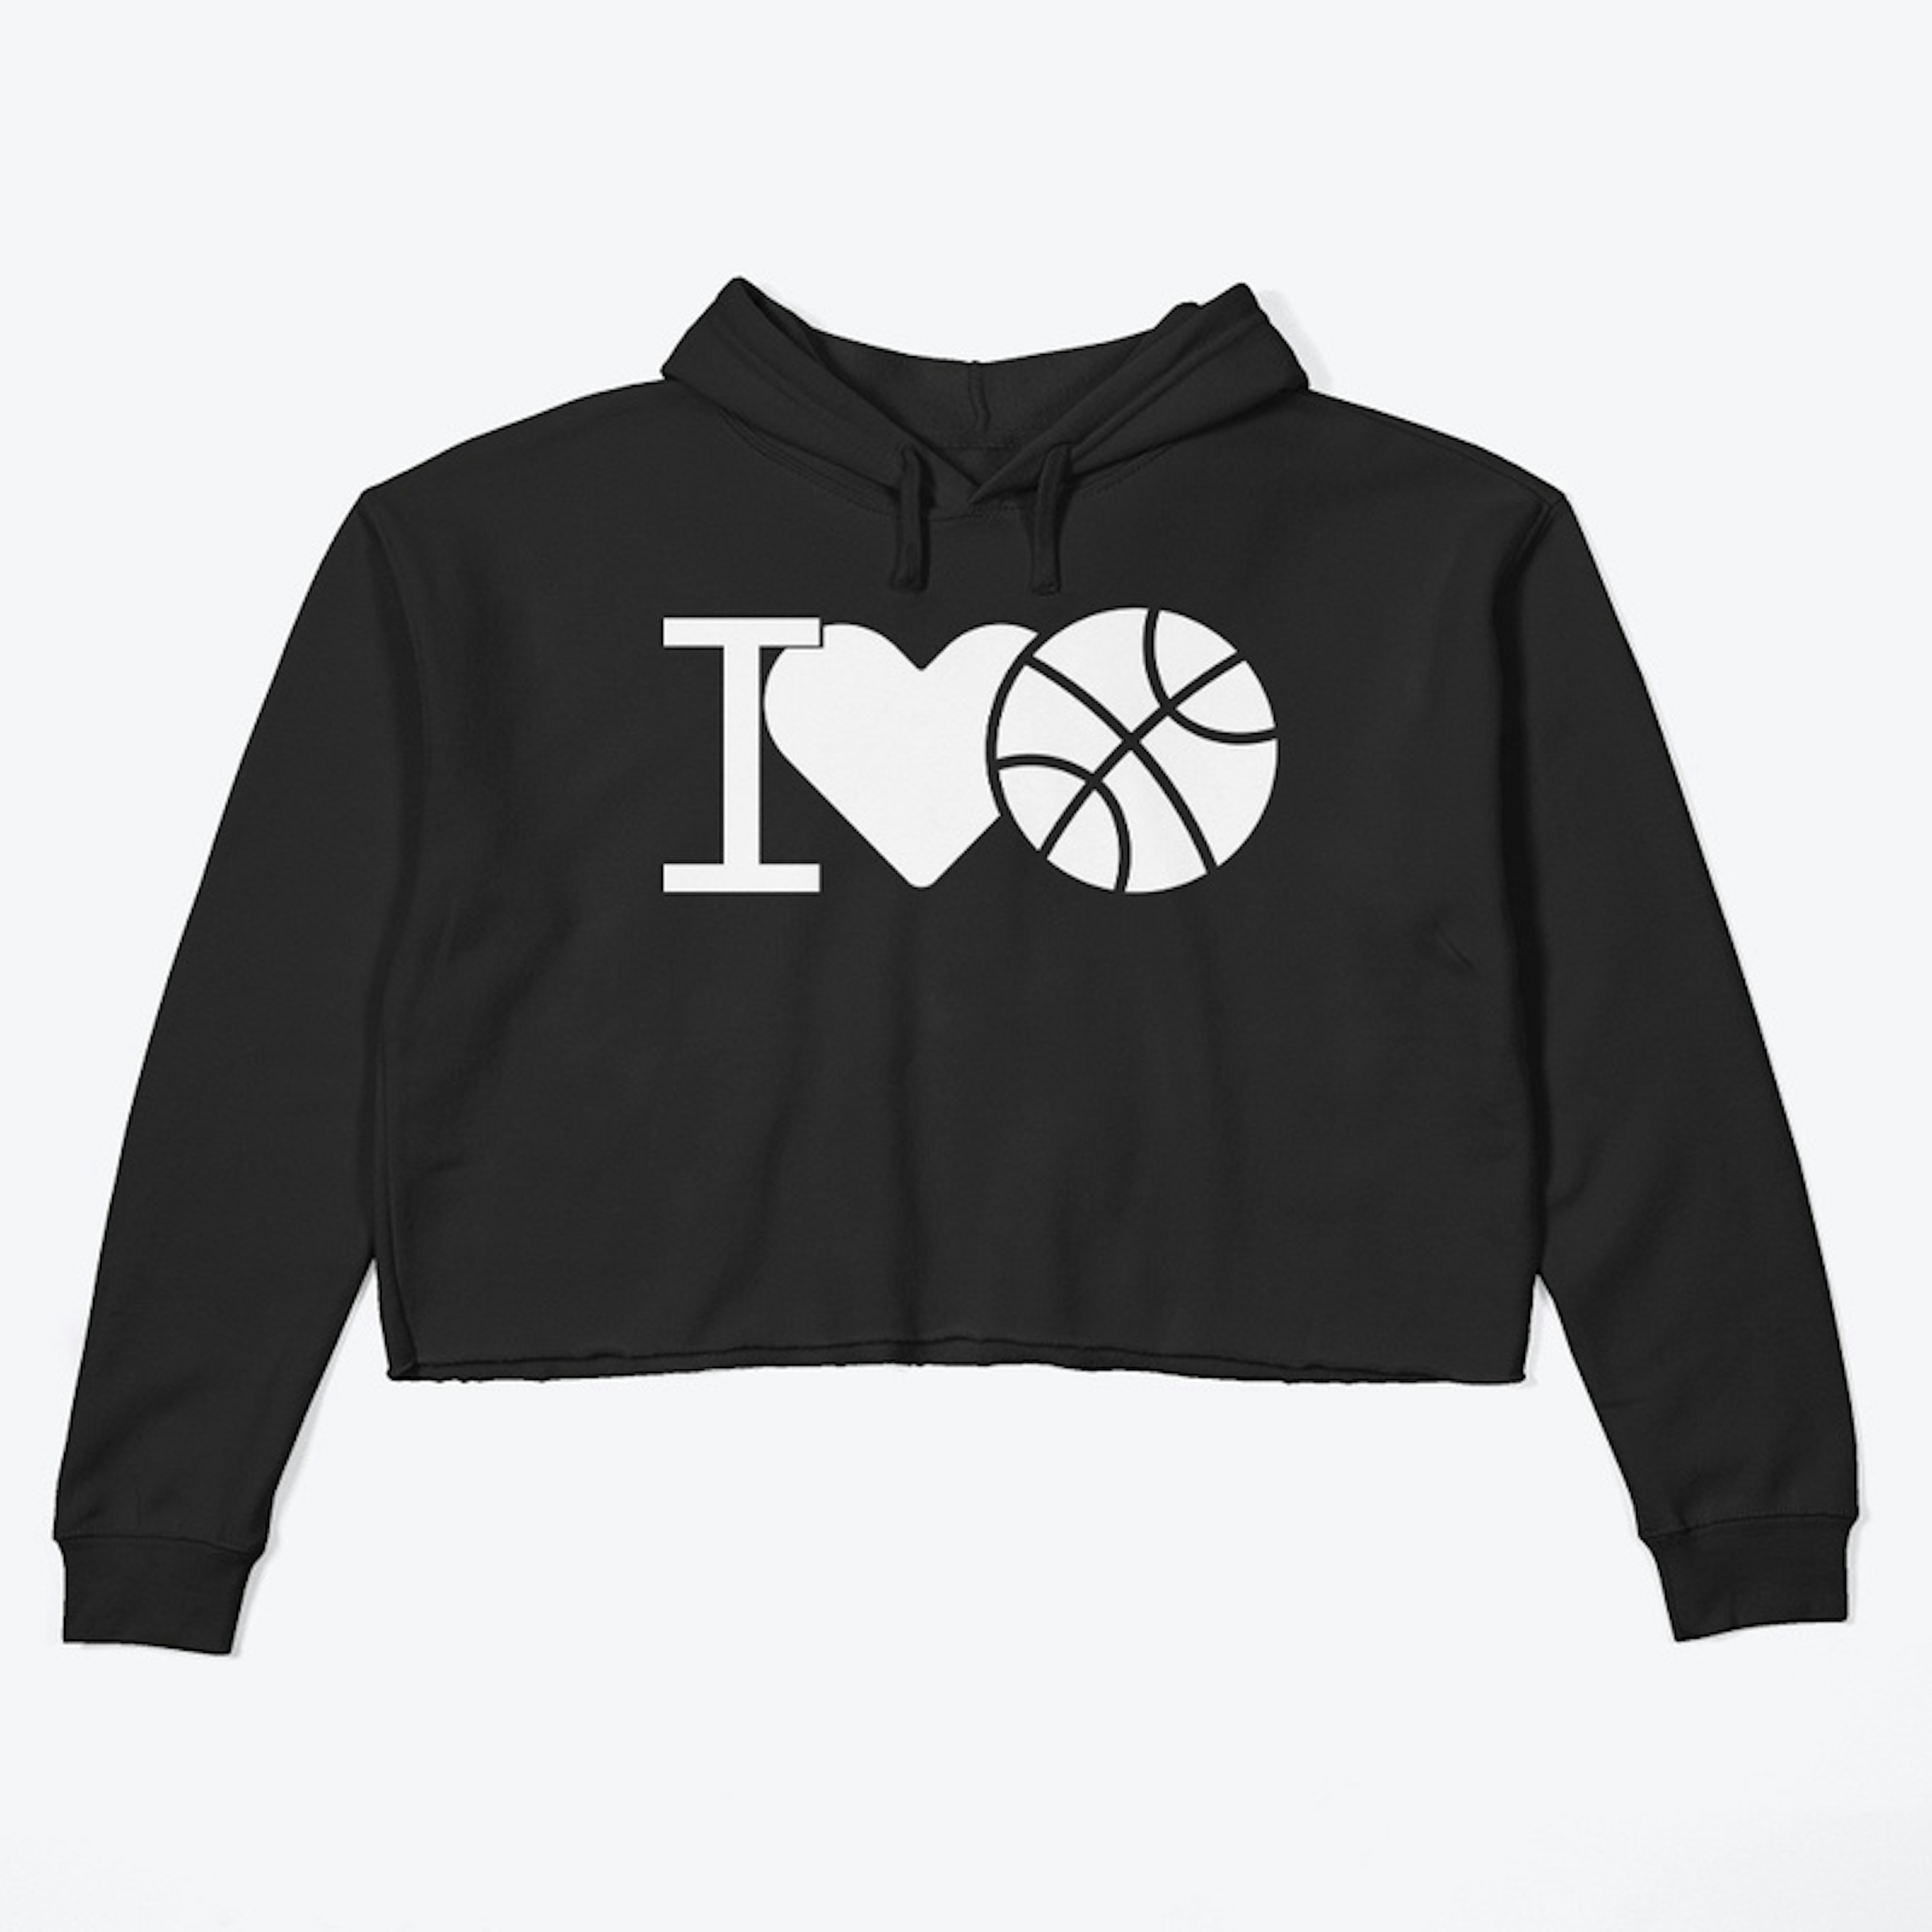 'I Love Basketball' hoodie for women